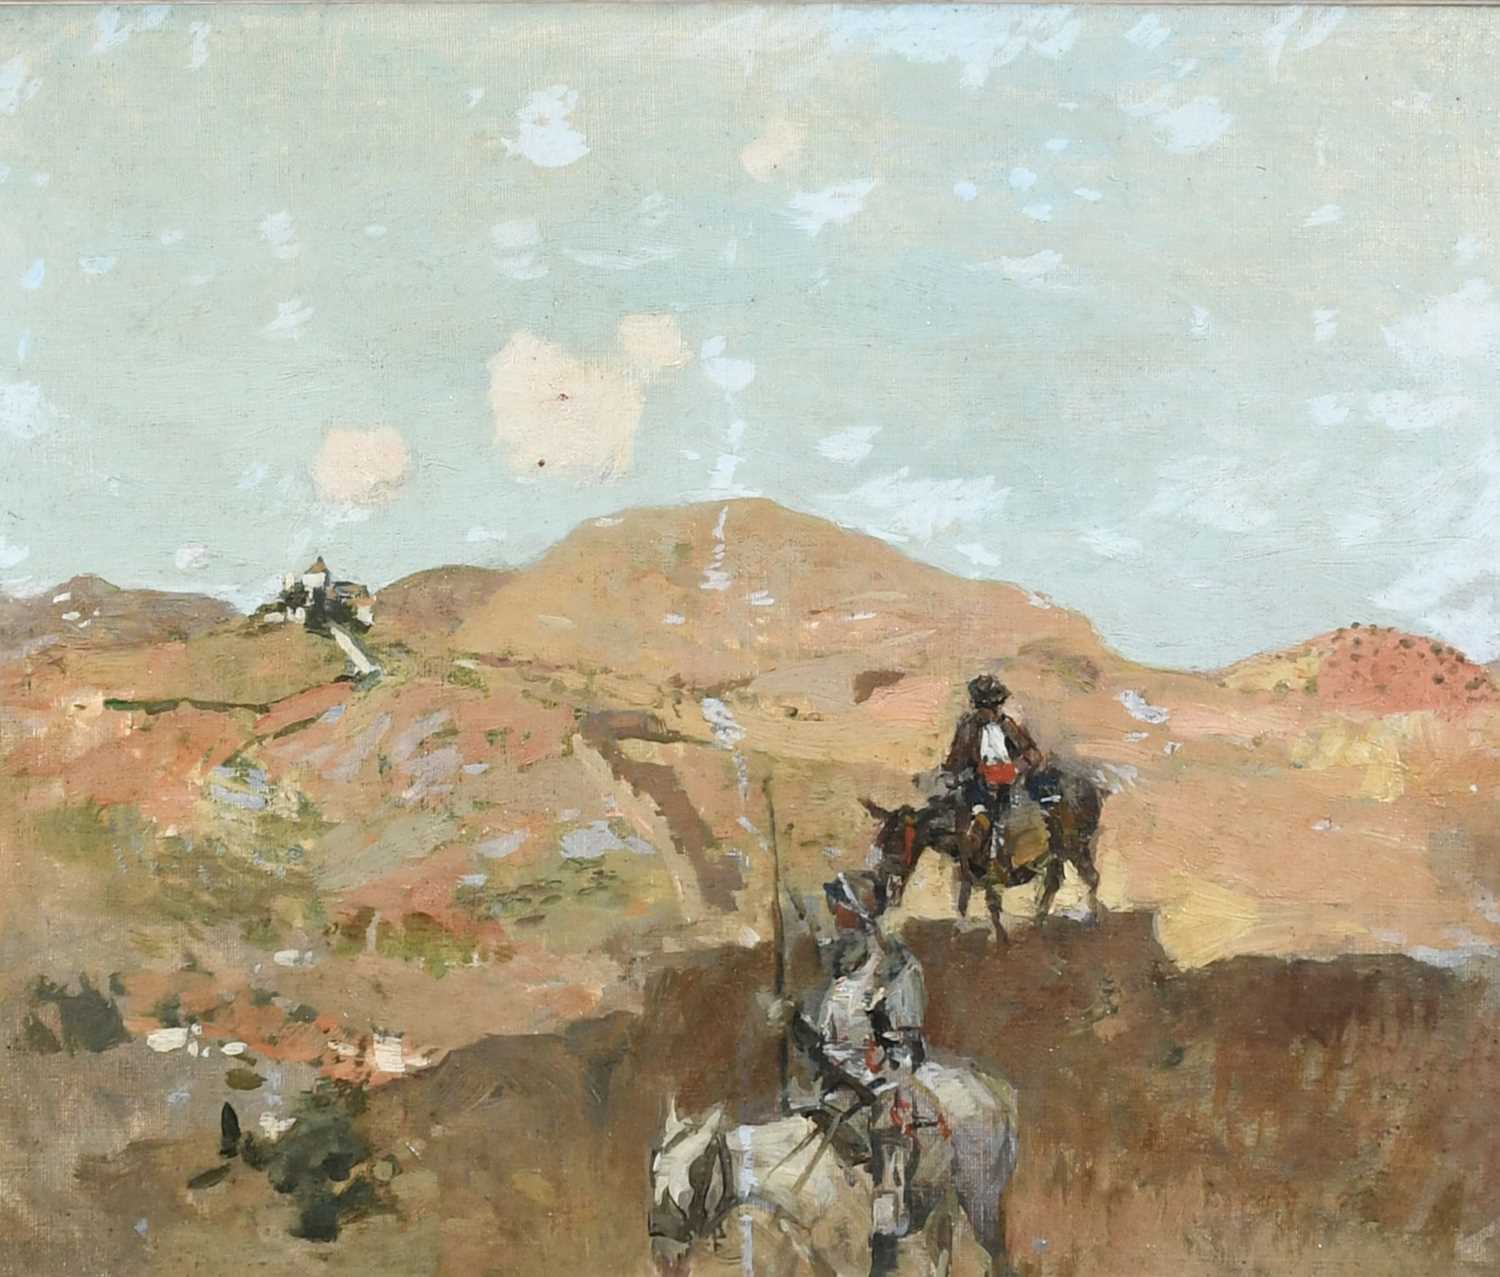 James Kerr-Lawson (Canadian 1862-1939) Don Quixote and Sancho Panza Oil on canvasboard 32.7 x 40.4cm